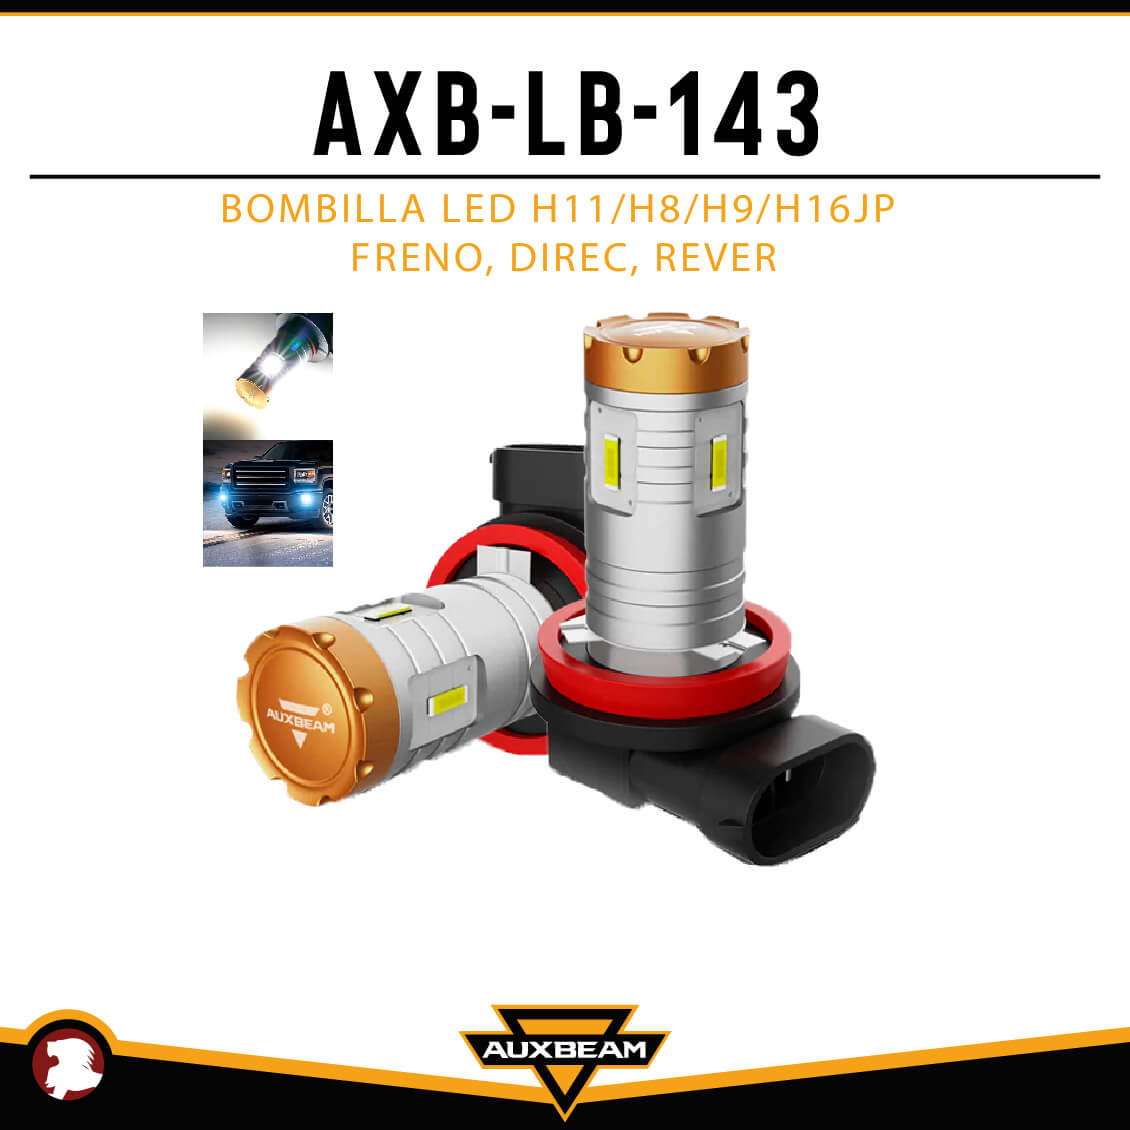 BOMBILLA LED H11/H8/H9/H16JP FRENO, DIREC, REVER - REACSA